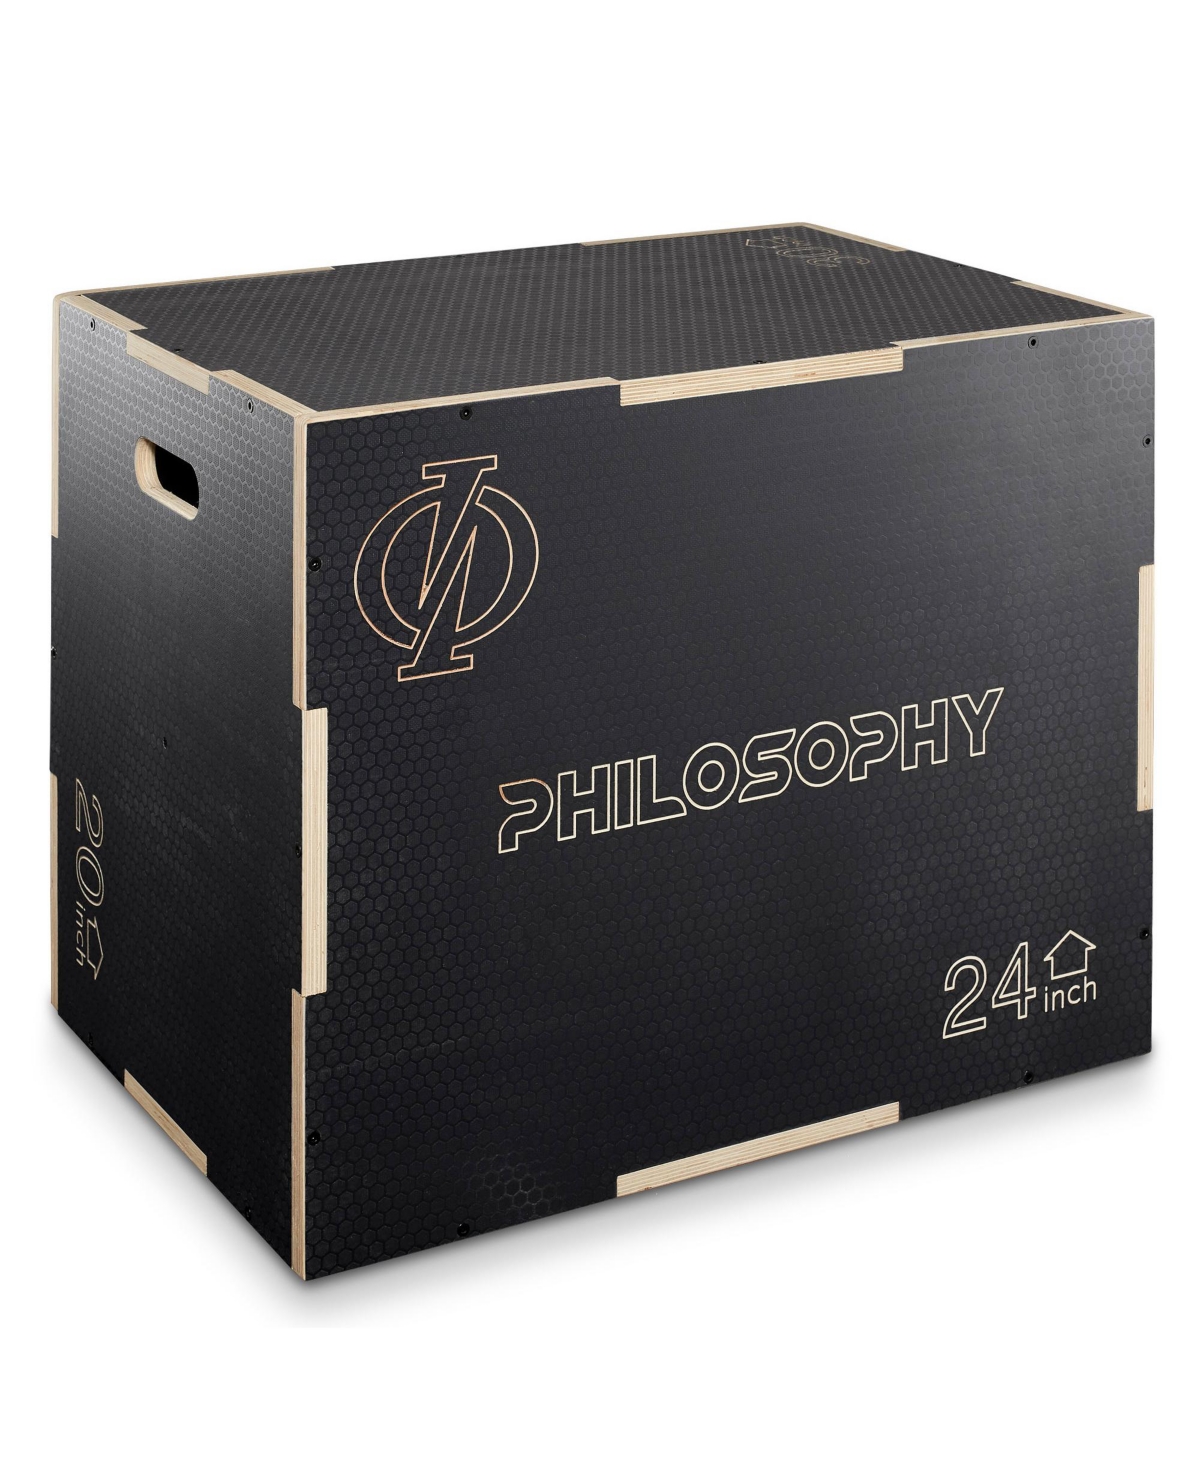 3 in 1 Non-Slip Wood Plyo Box, 30" x 24" x 20", Black, Jump Plyometric Box for Training and Conditioning - Black